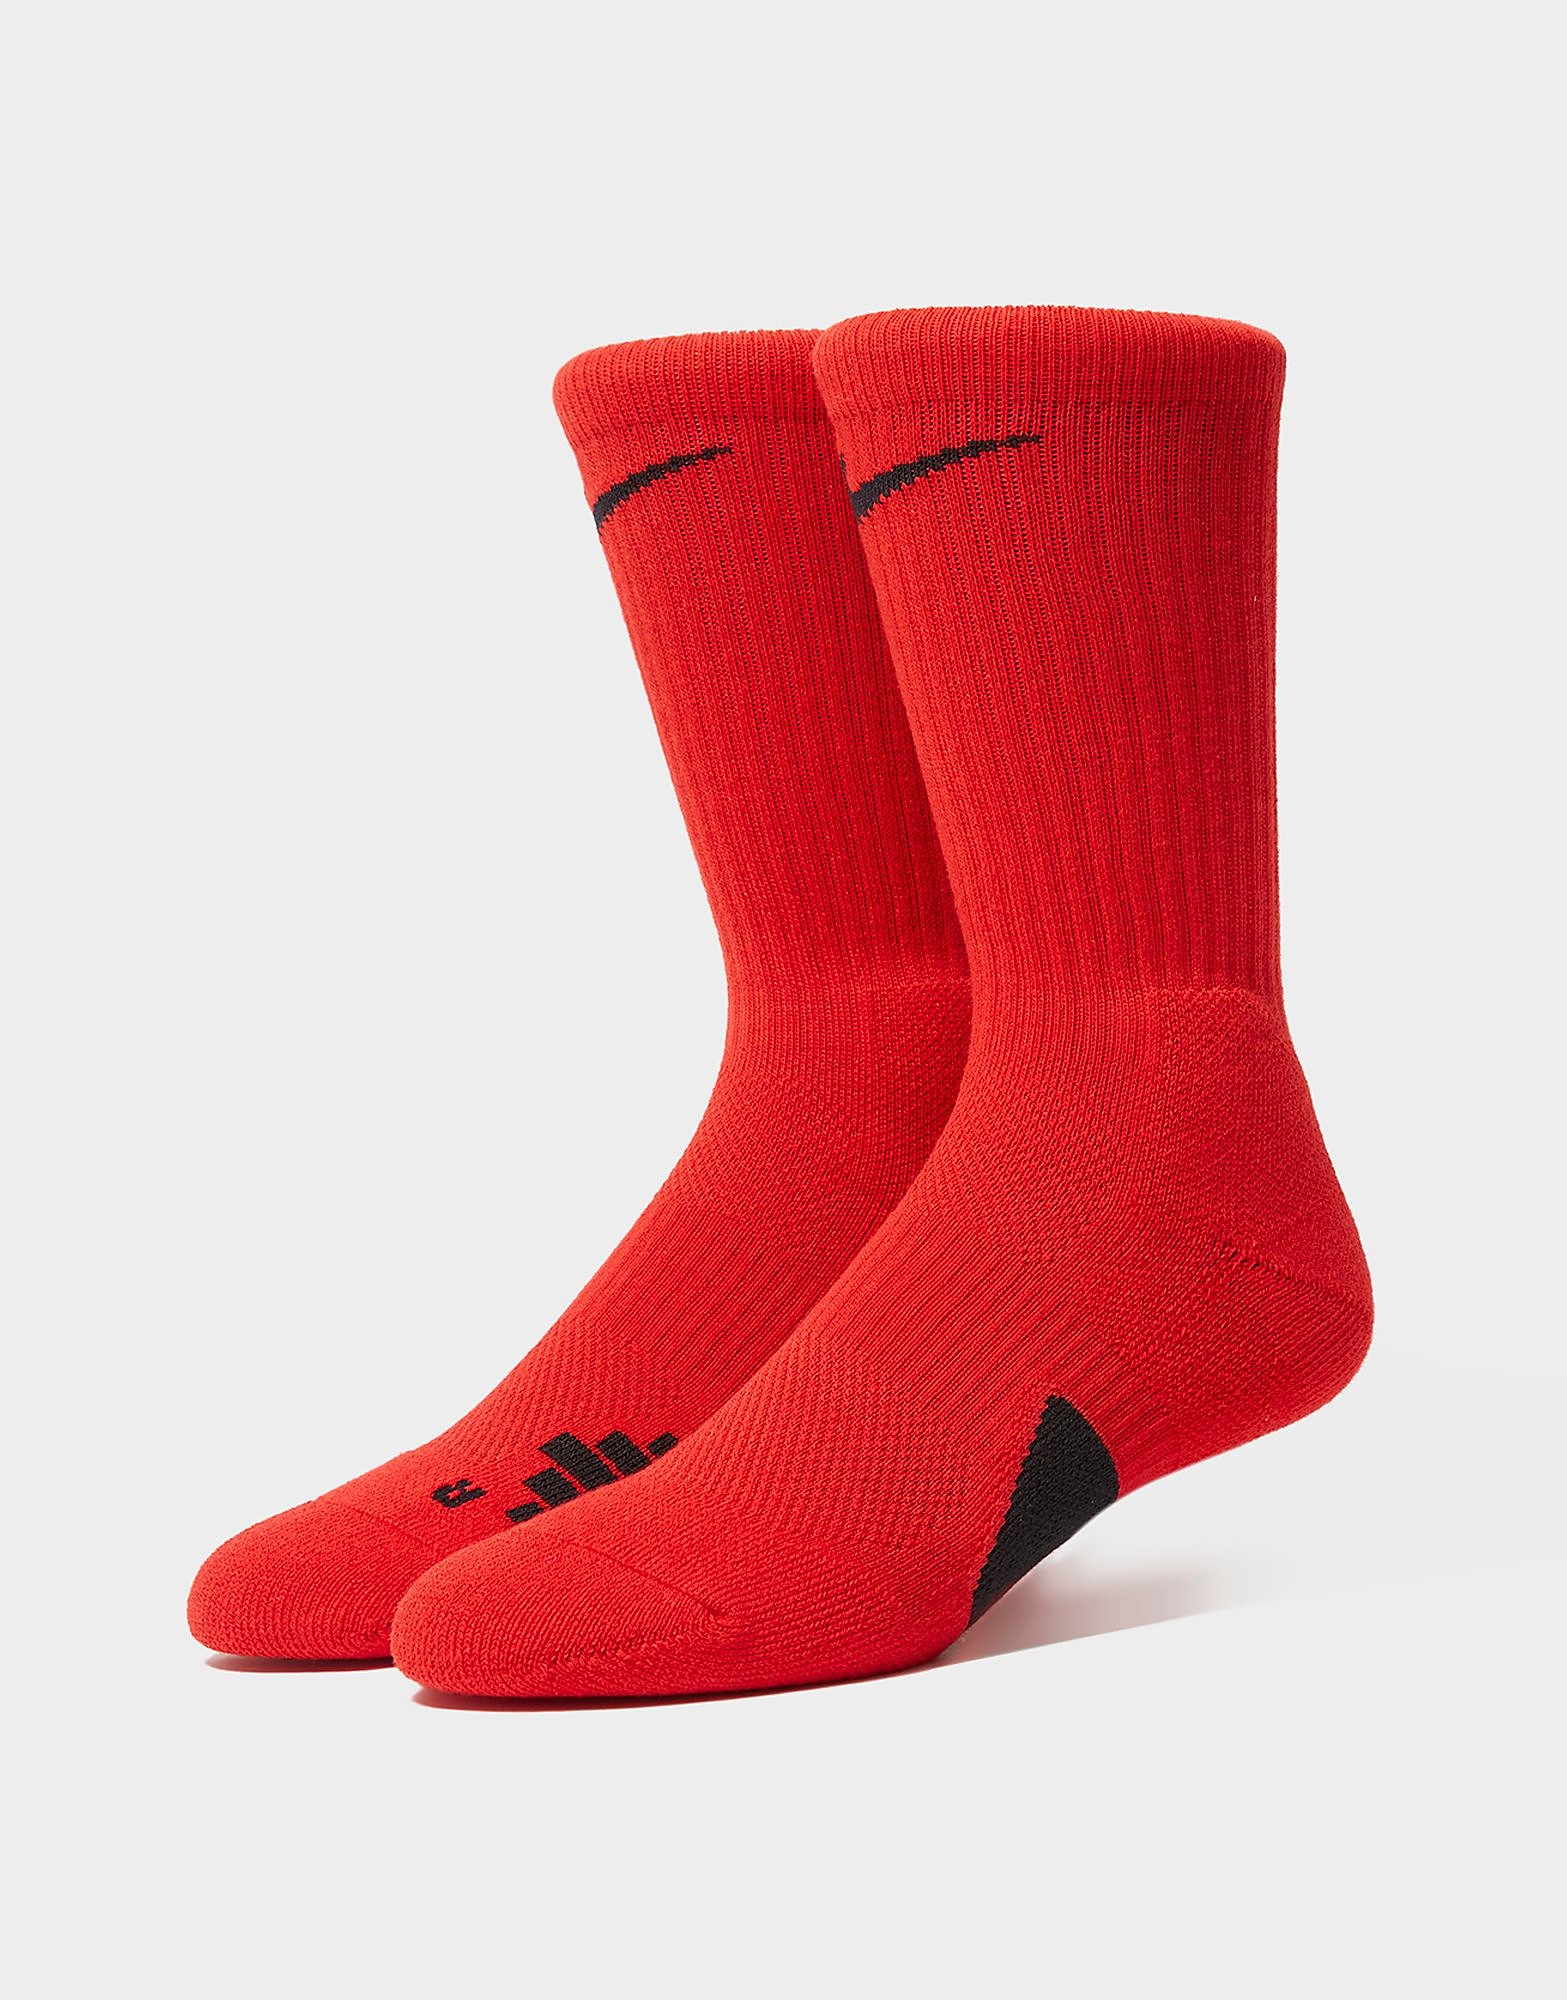 Nike elite-koripallosukat - mens, punainen, nike